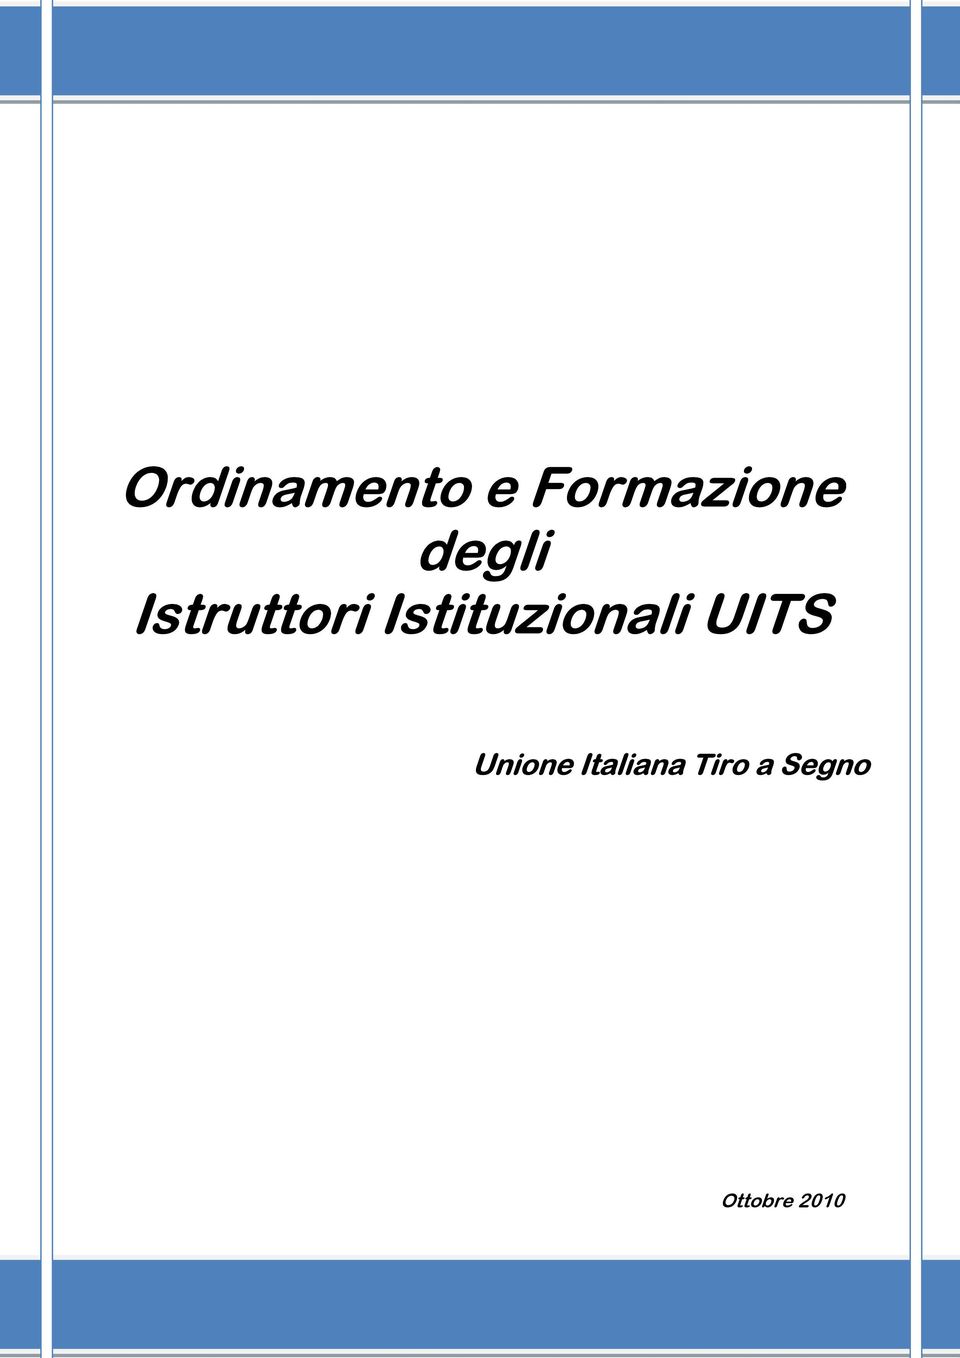 Istituzionali UITS Unione